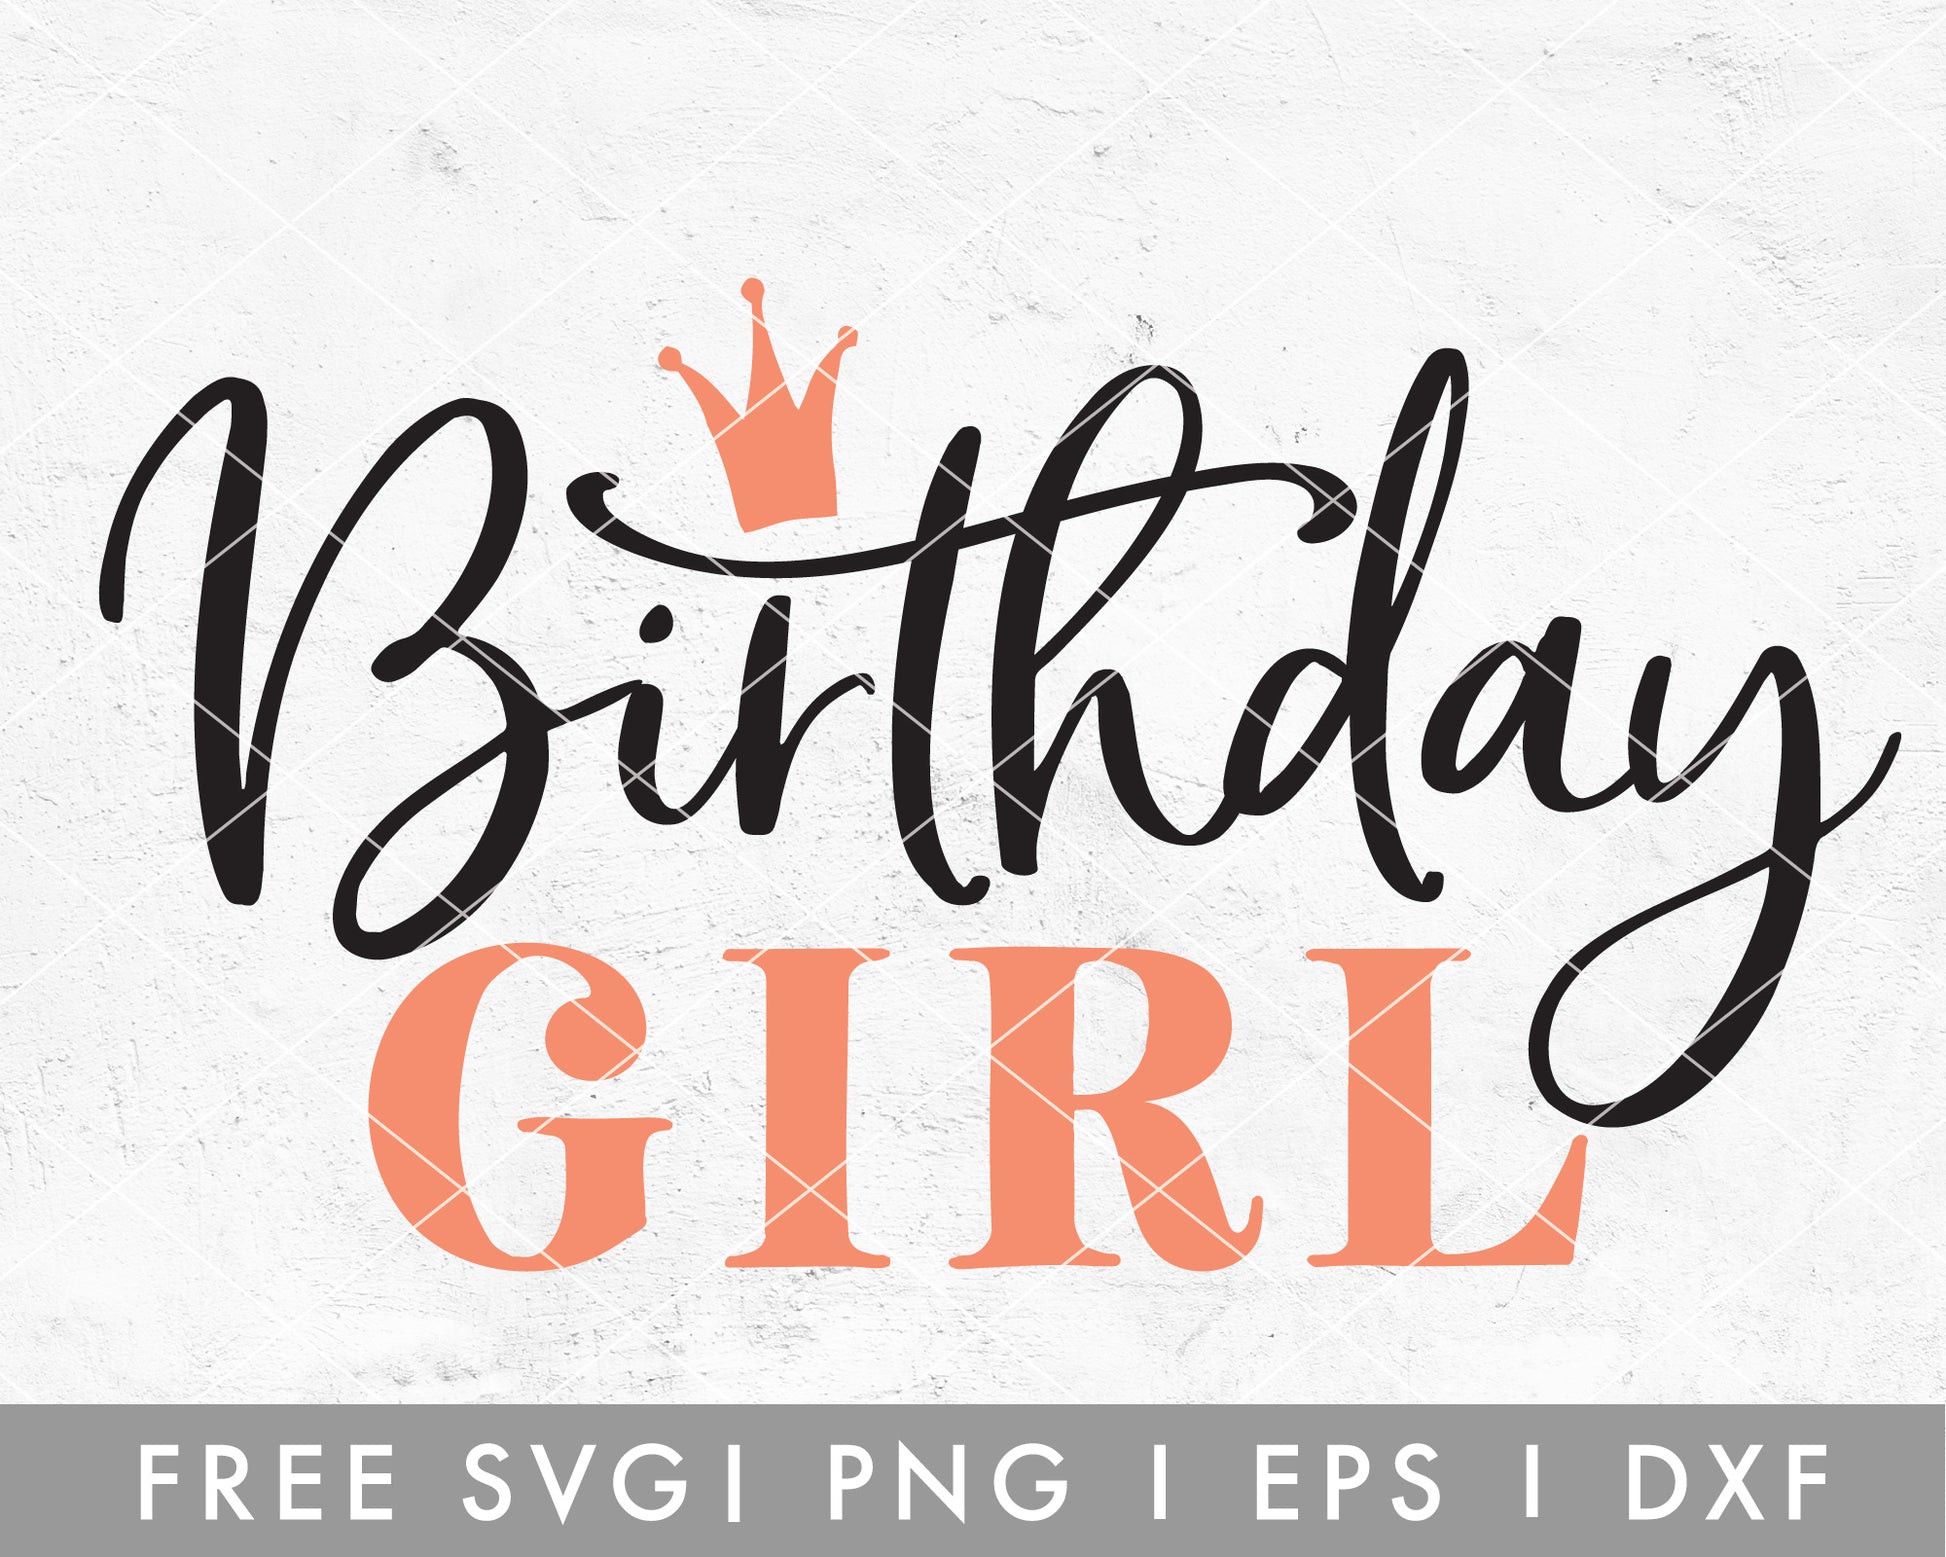 Birthday Girl Svg, Its My Birthday Svg, Birthday Svg, Happy Birthday Svg,  Birthday Shirt, Png, Dxf, Printable, Cut File, Cricut, Silhouette 